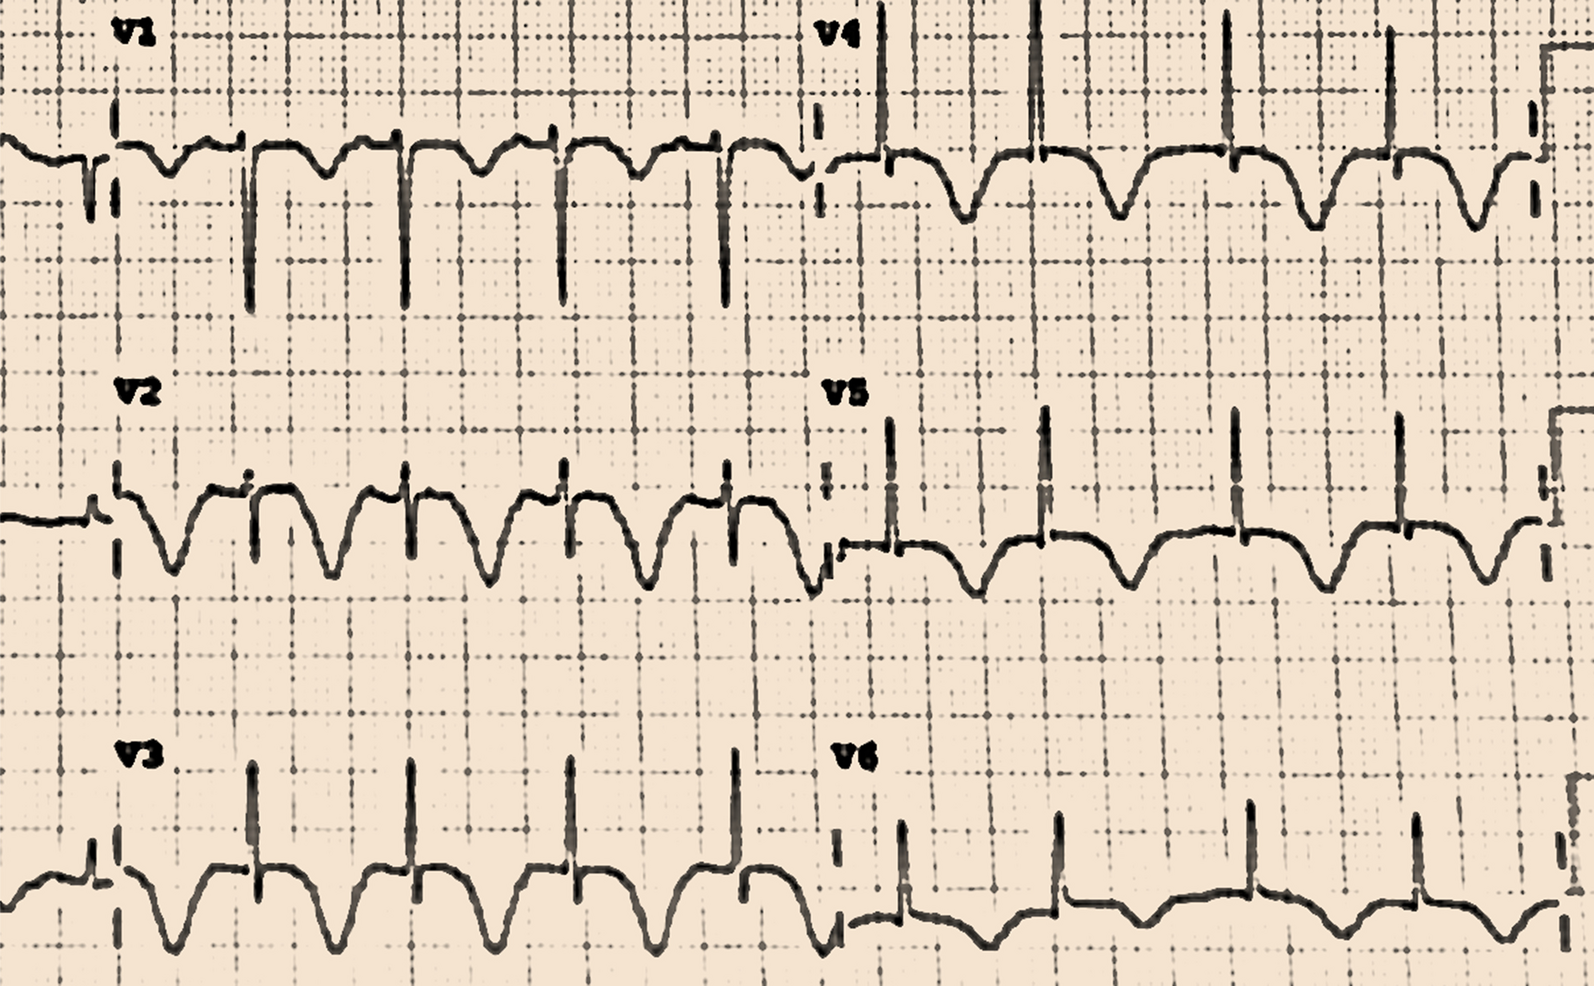 Takotsubo cardiomyopathy in India and its electrocardiography (ECG) comparison to myocardial infarction